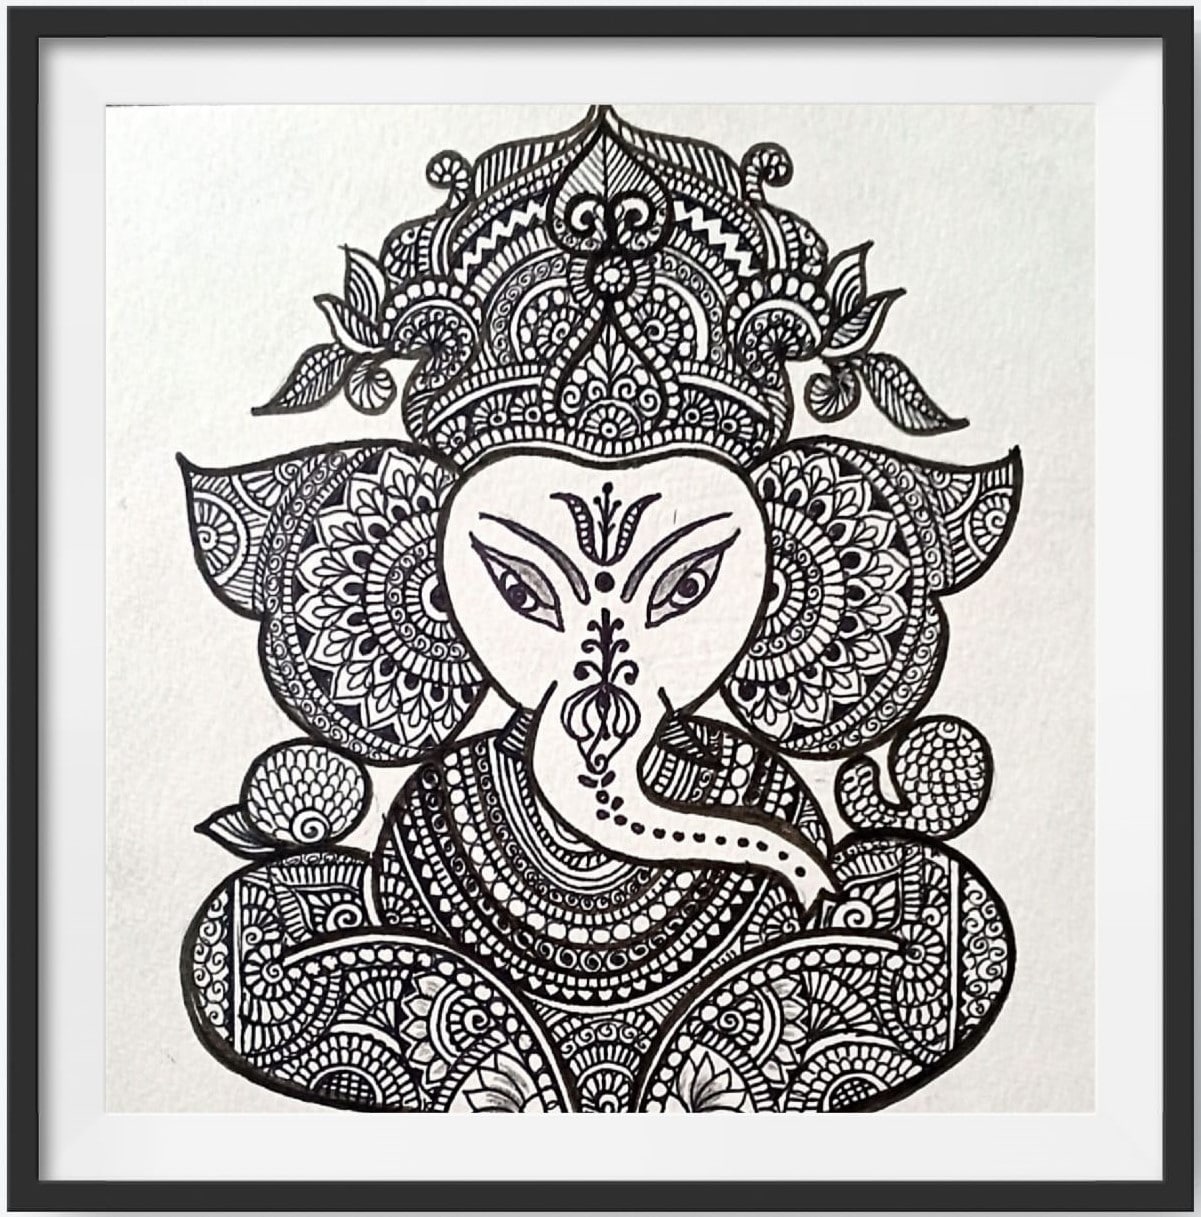 Mandala Art #8 (26 x 26 cms including frame) - International ...